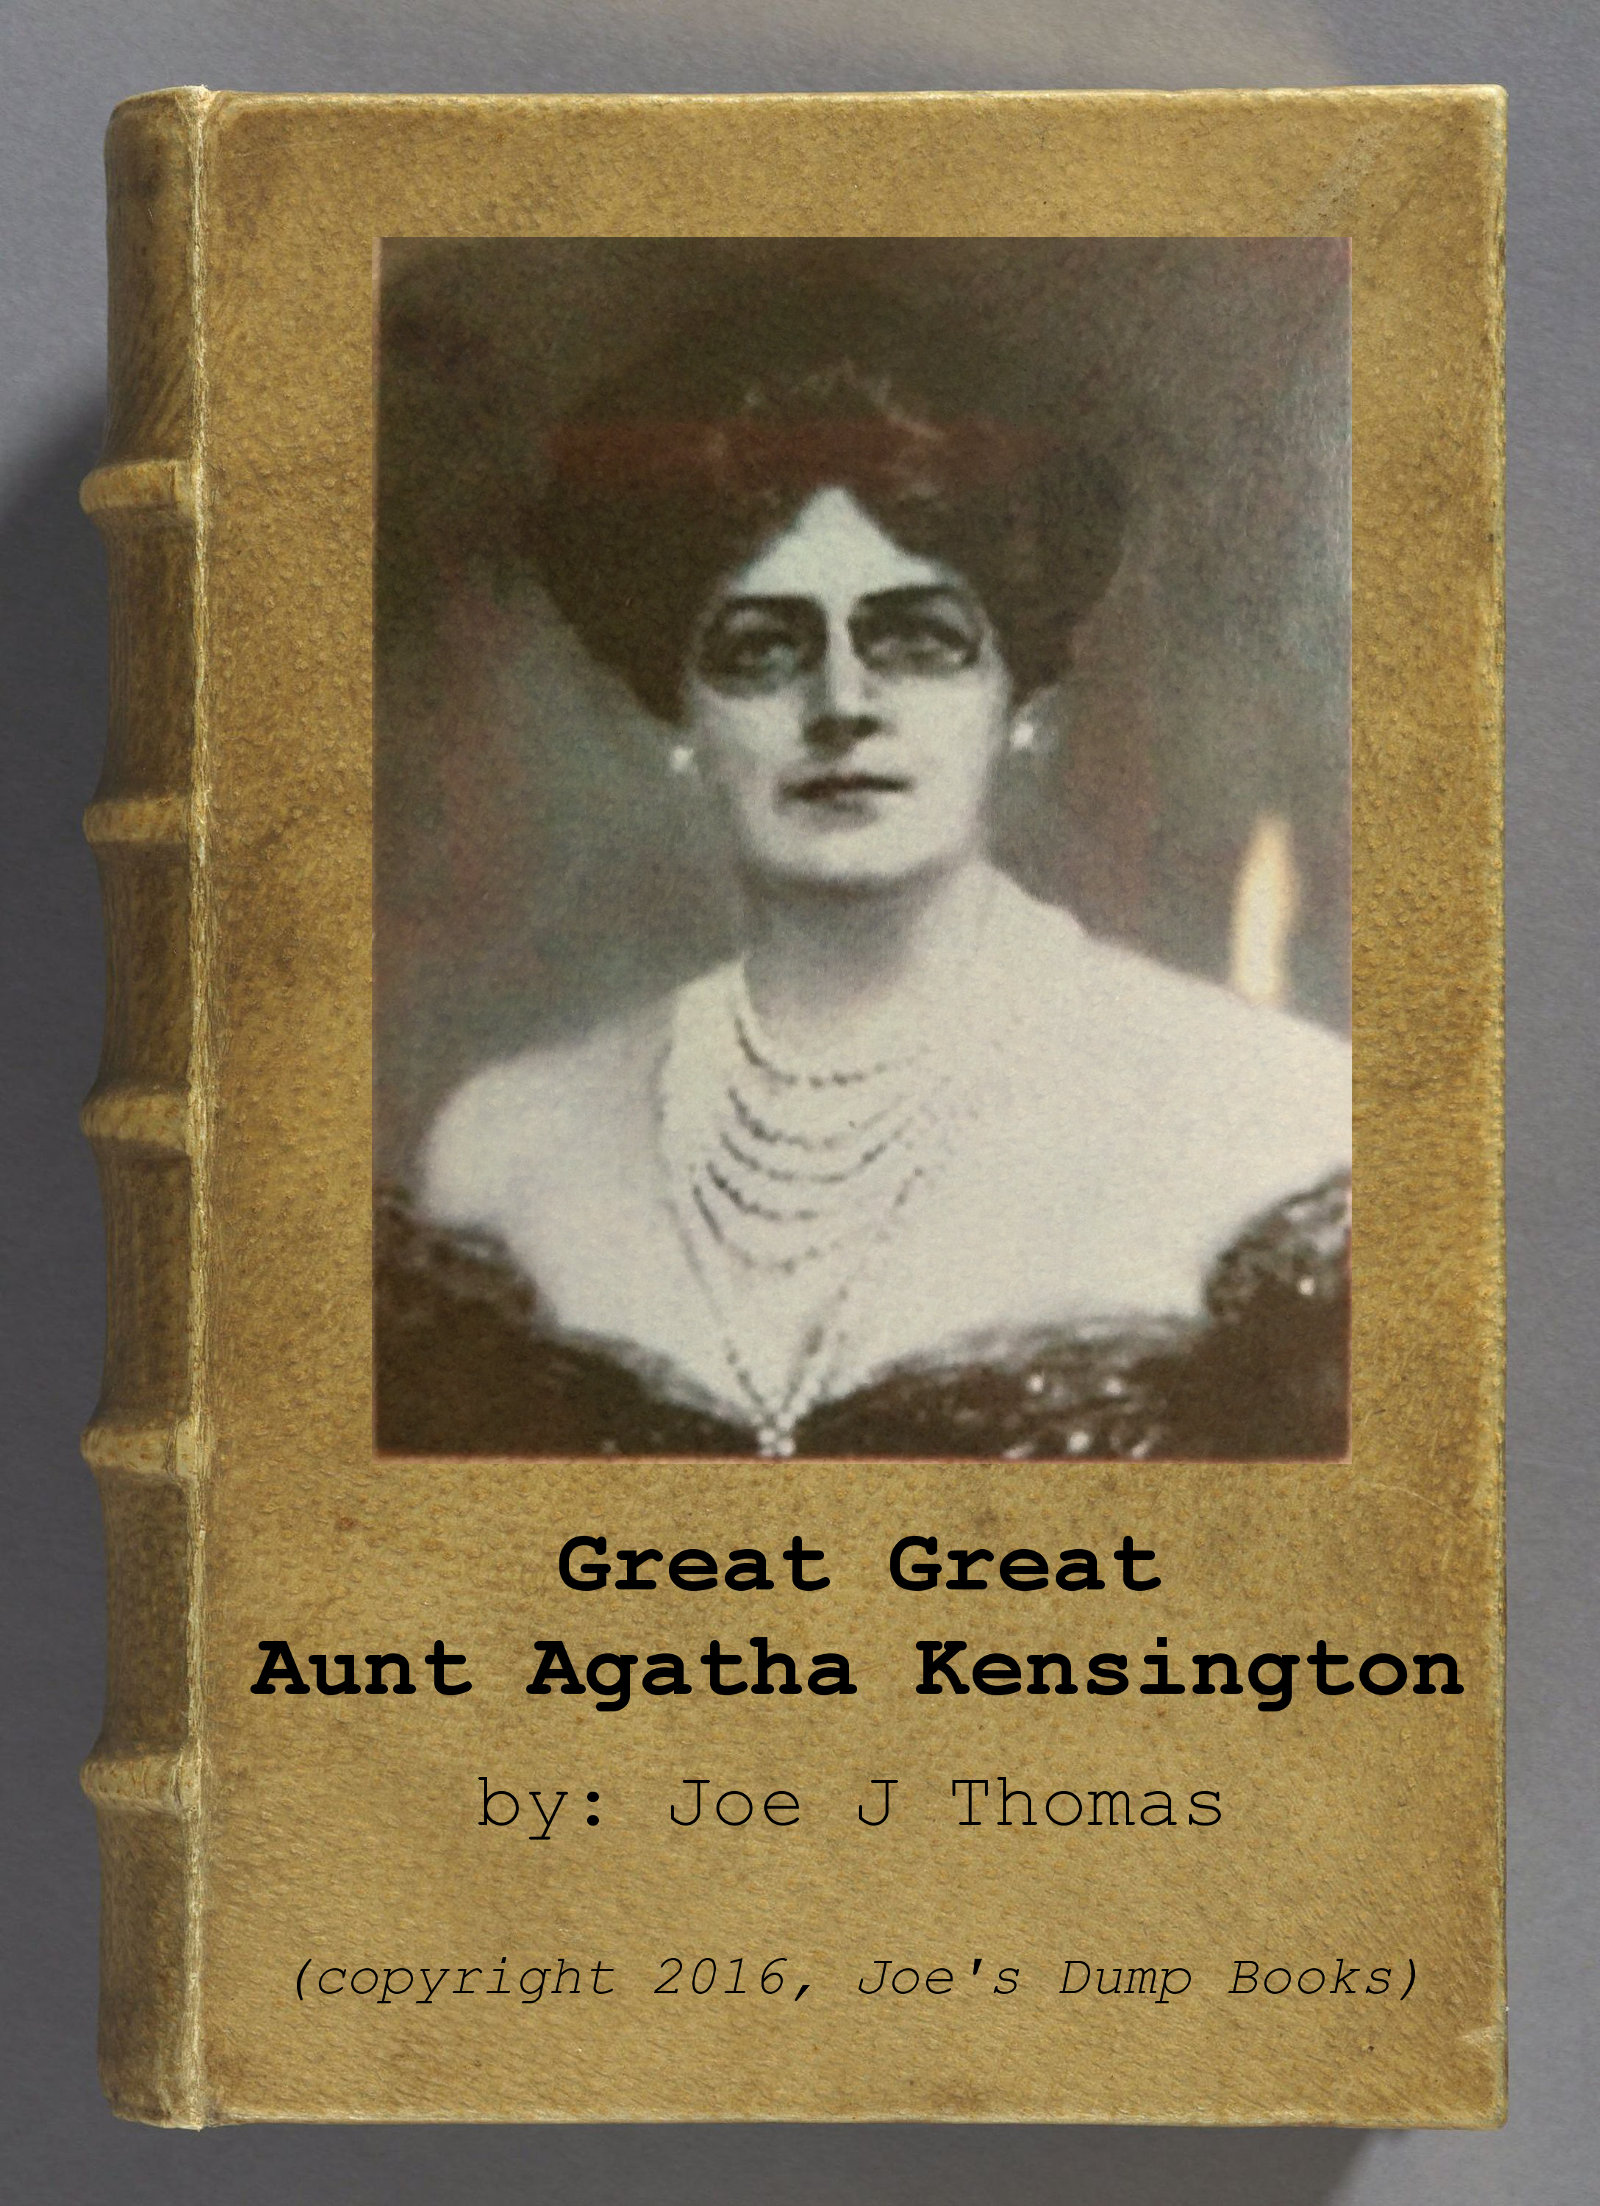 Great Great Aunt Agatha Kensington book cover